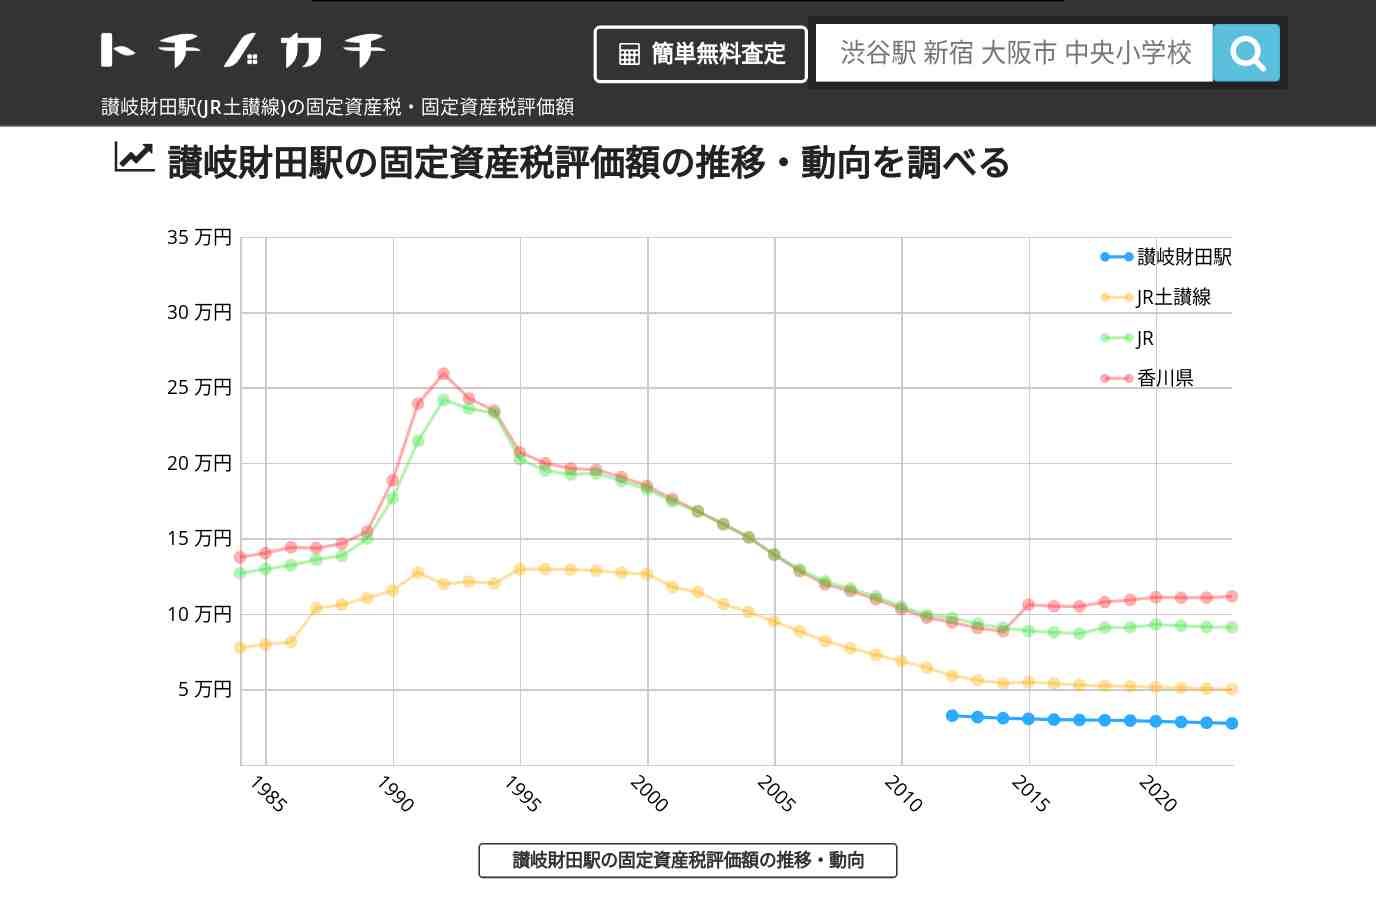 讃岐財田駅(JR土讃線)の固定資産税・固定資産税評価額 | トチノカチ